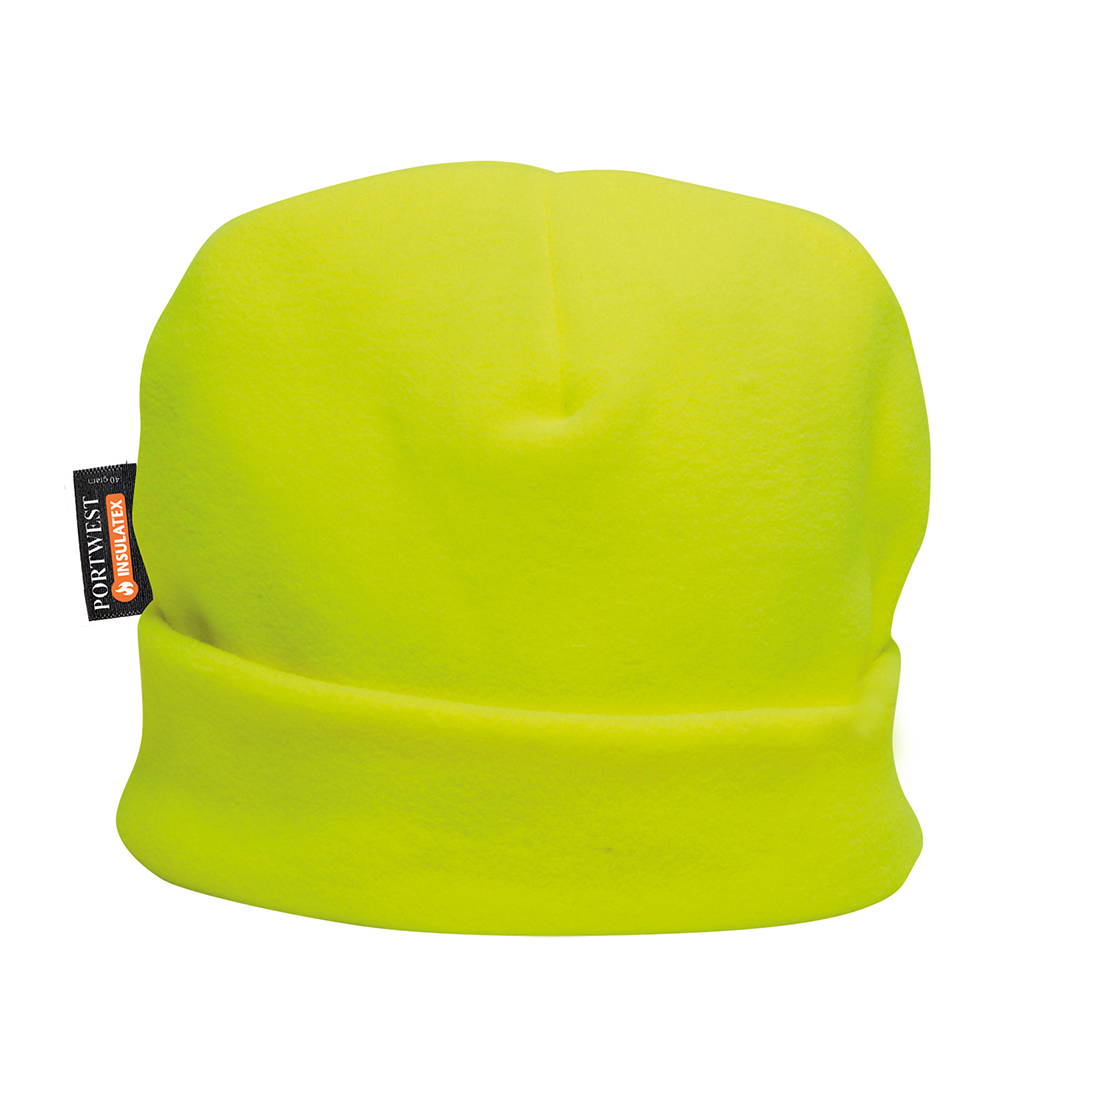 Portwest HA10 - Fleece Hat Insulatex Lined